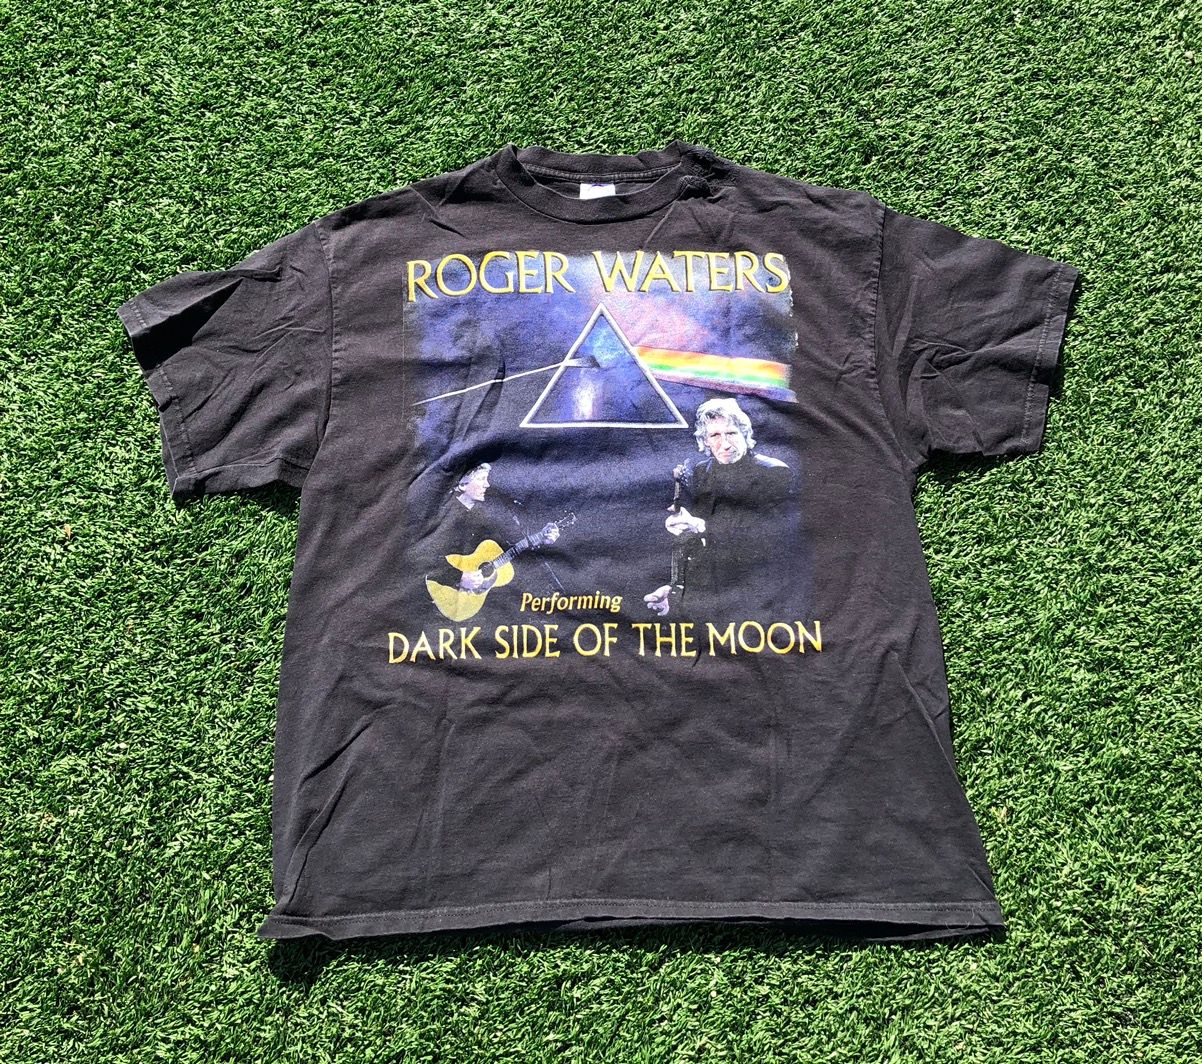 Vintage Vintage Pink Floyd Roger Waters Tour Shirt Size US L / EU 52-54 / 3 - 1 Preview